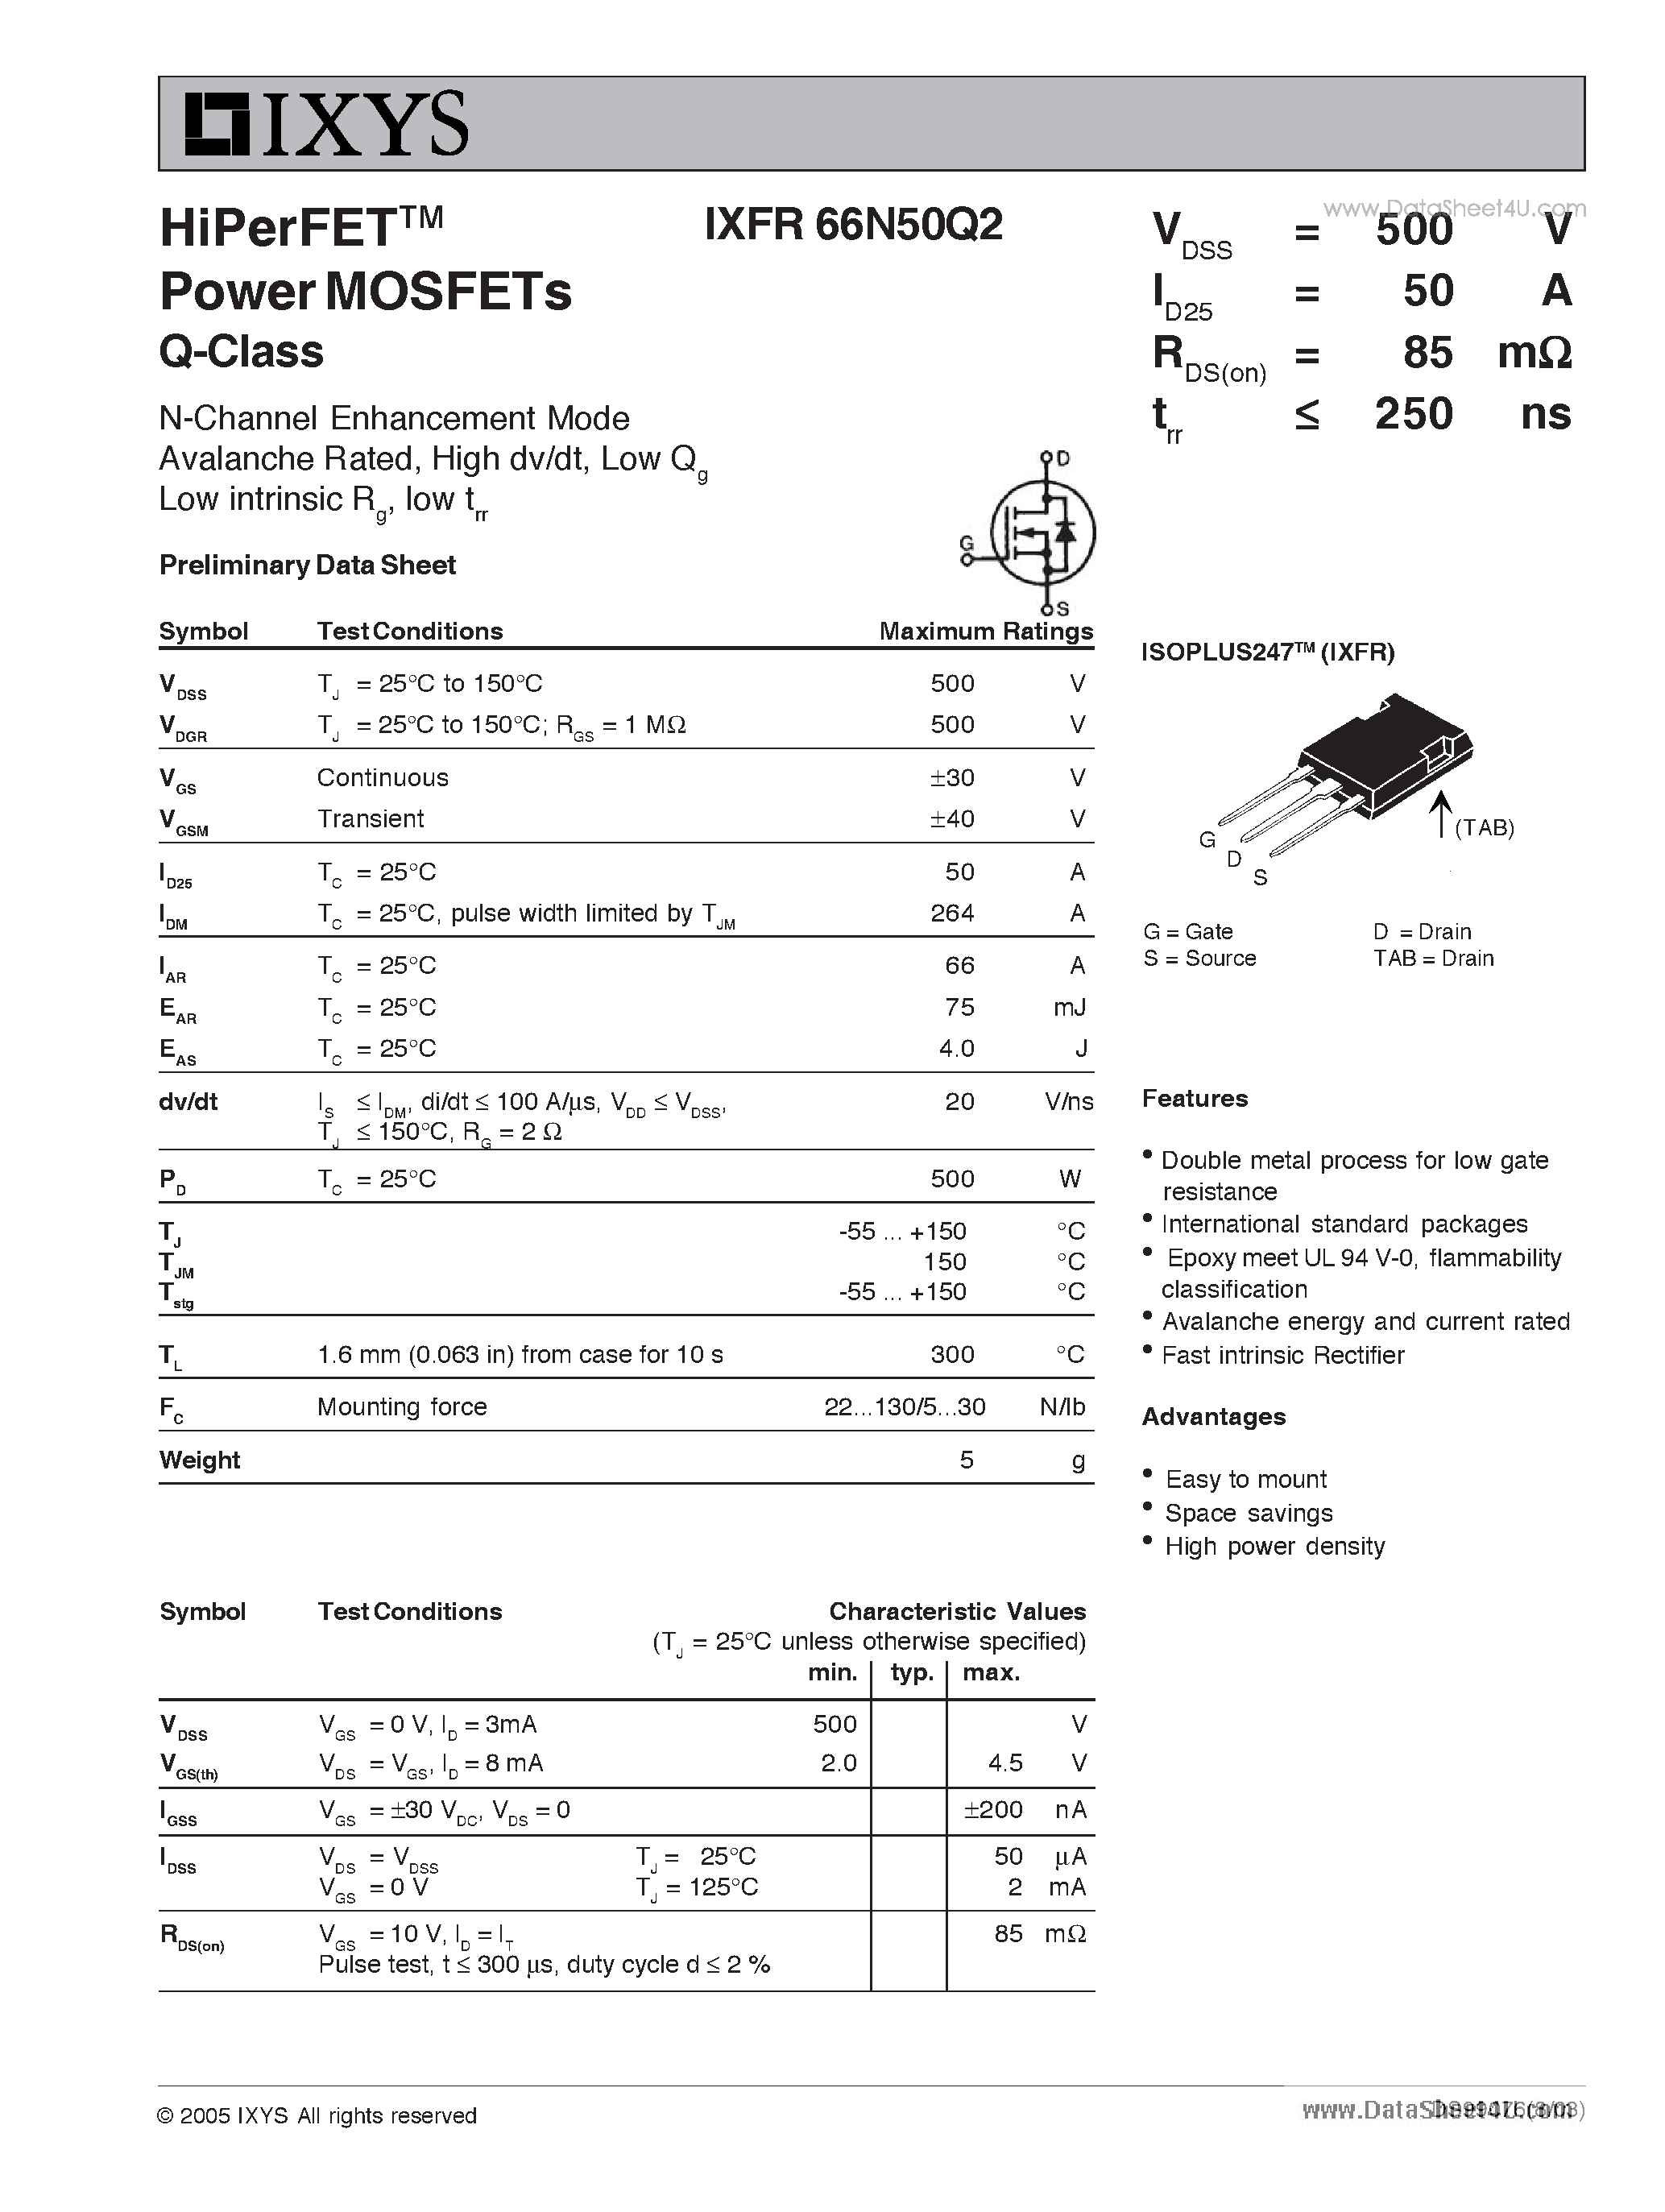 Даташит IXFR66N50Q2 - HiPerFET Power MOSFETs Q-Class страница 1